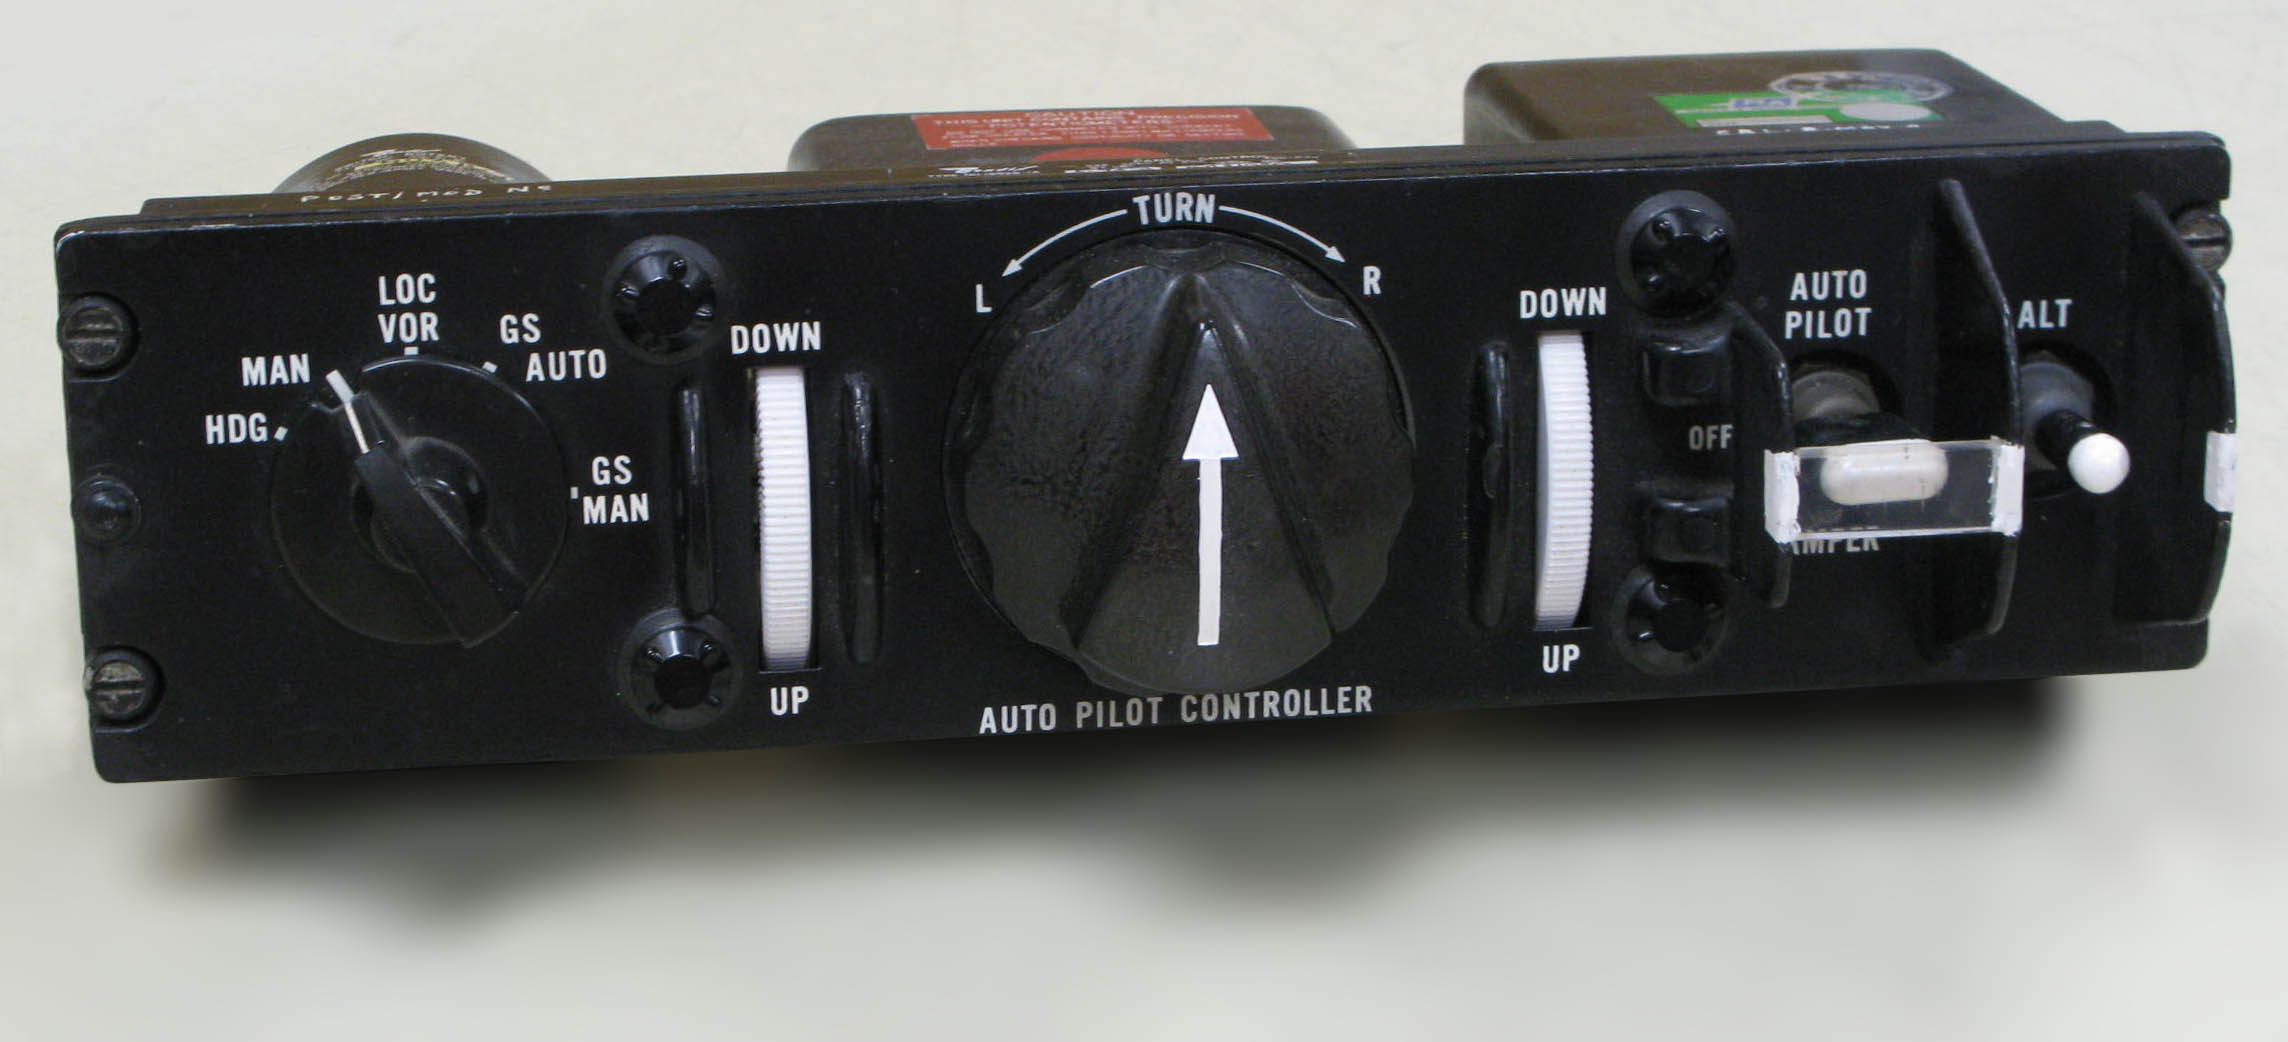 Autopilot Controller